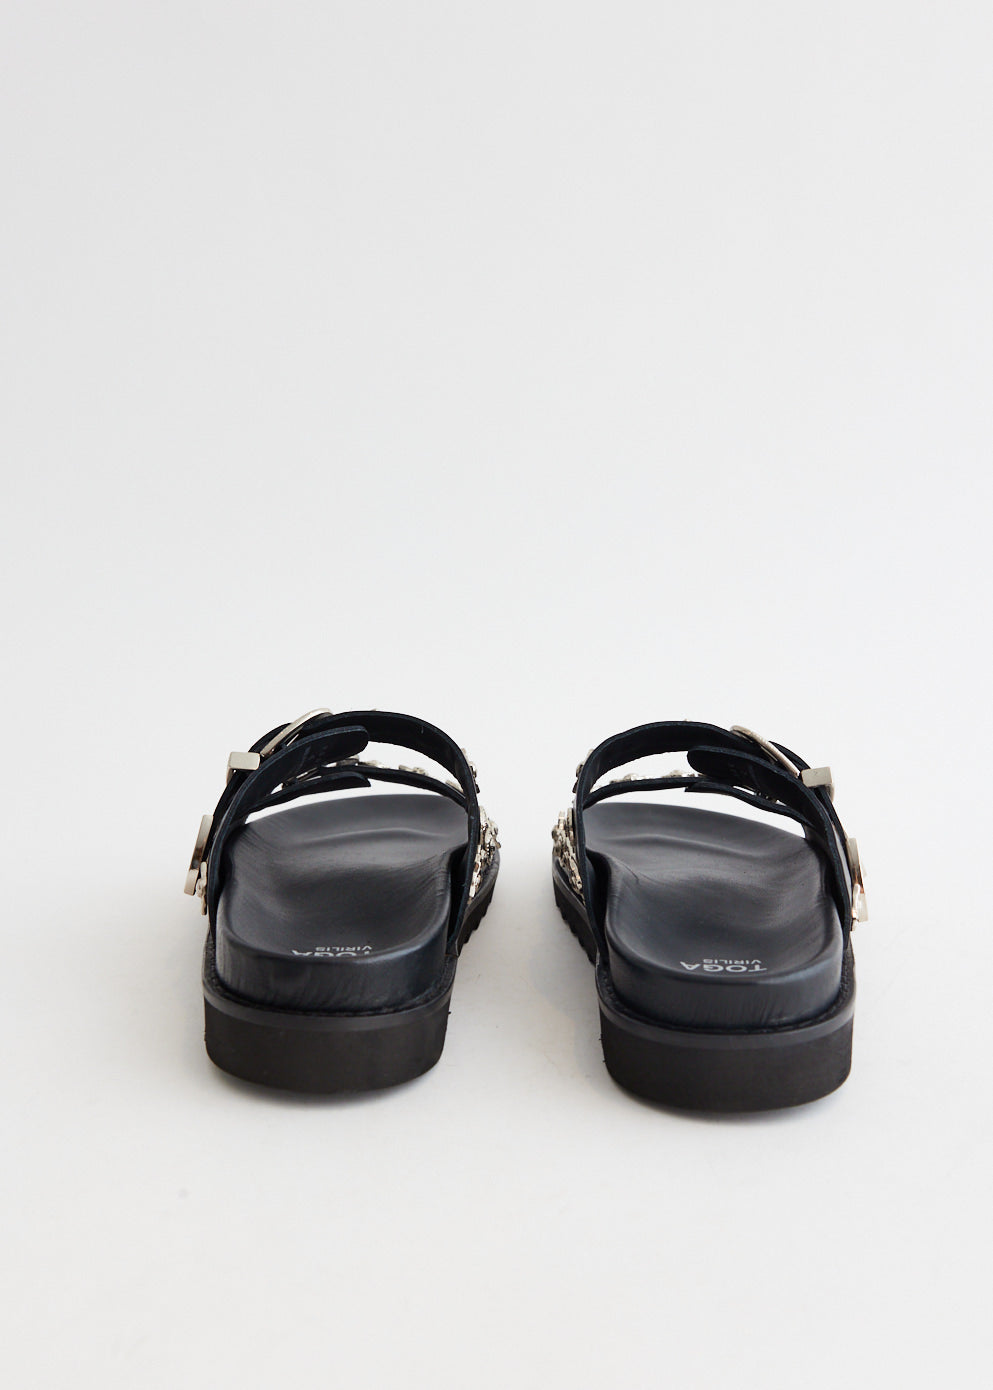 AJ830 Black Leather Sandals